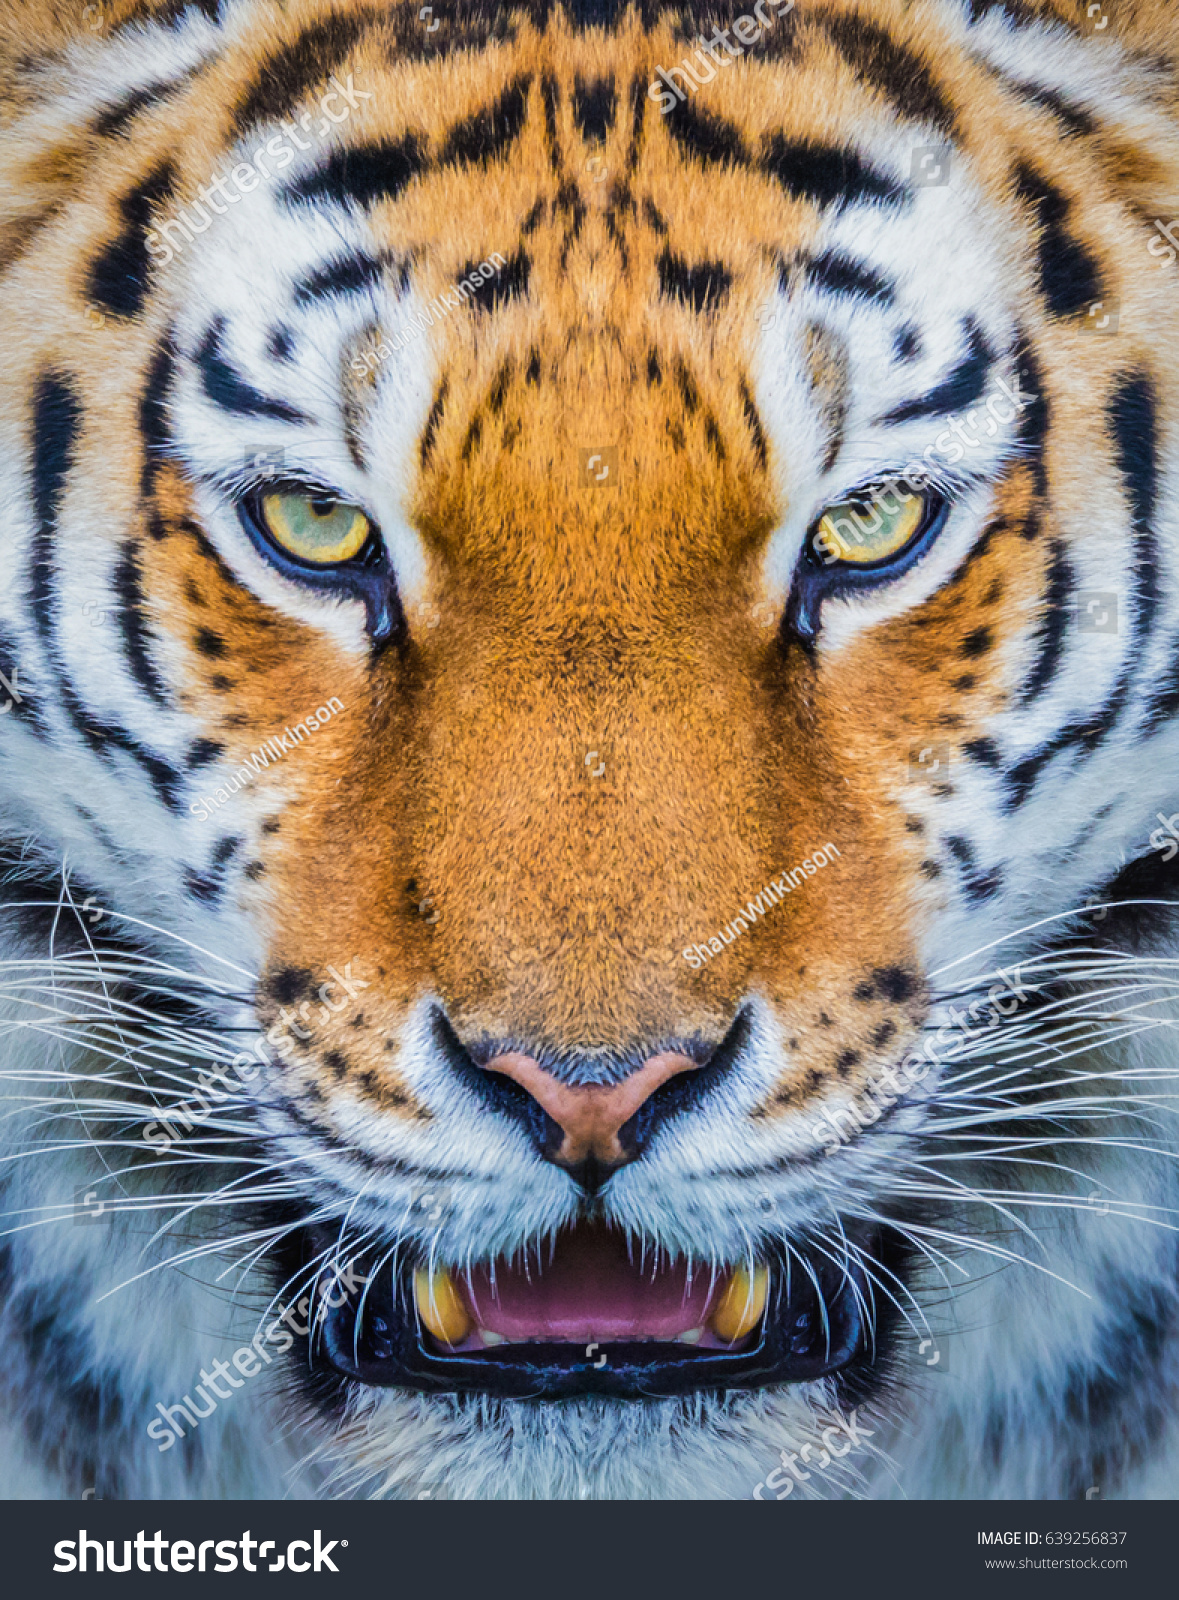 Tiger close up head shot image #639256837